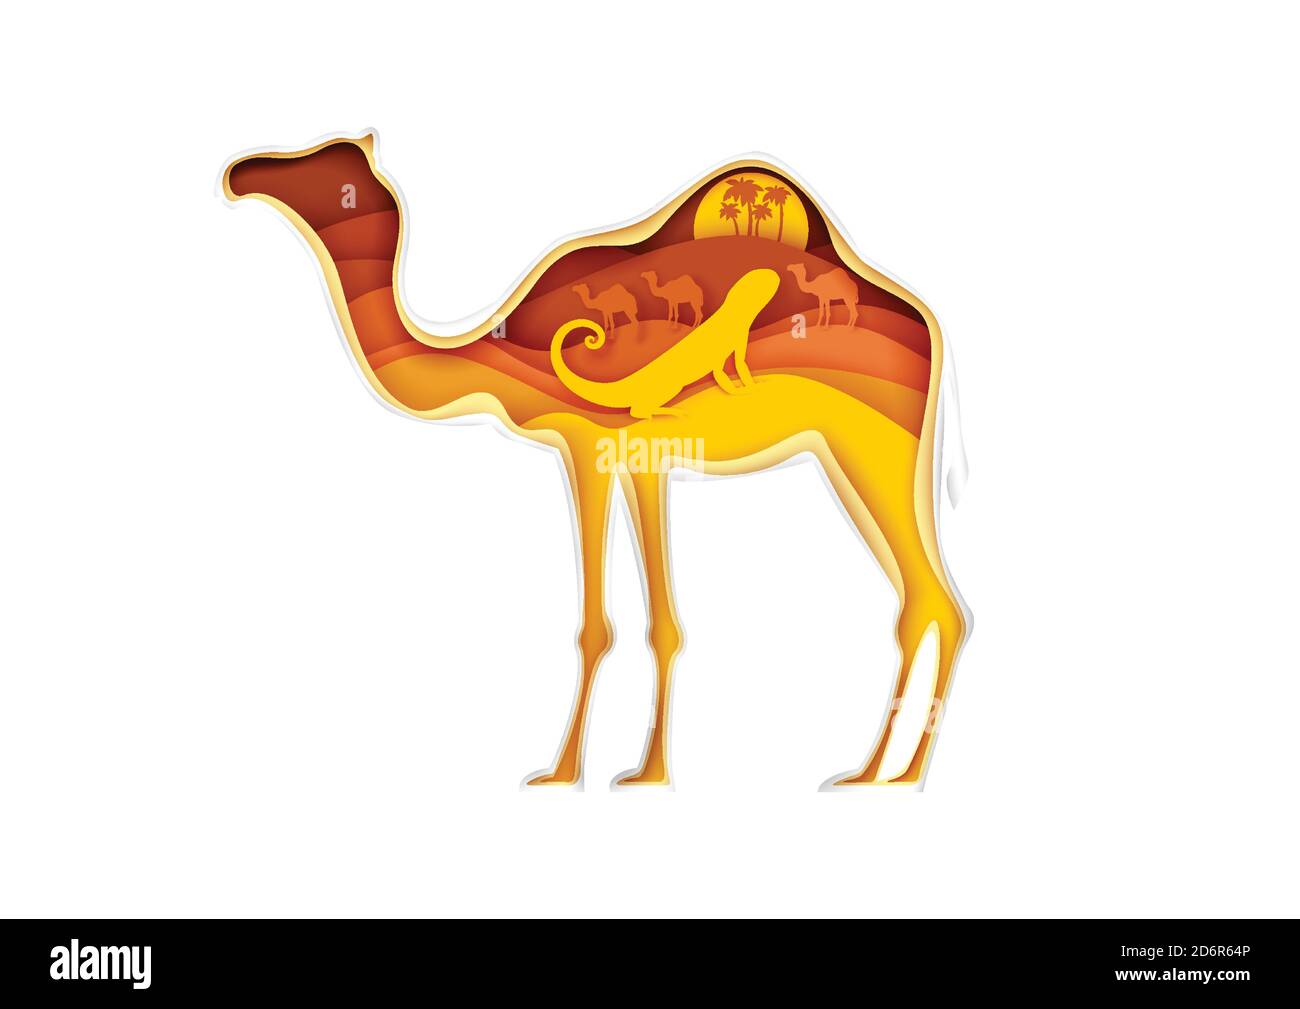 Camel silhouette with Sahara desert landscape, lizard, caravan inside, vector illustration in paper art style. Stock Vector